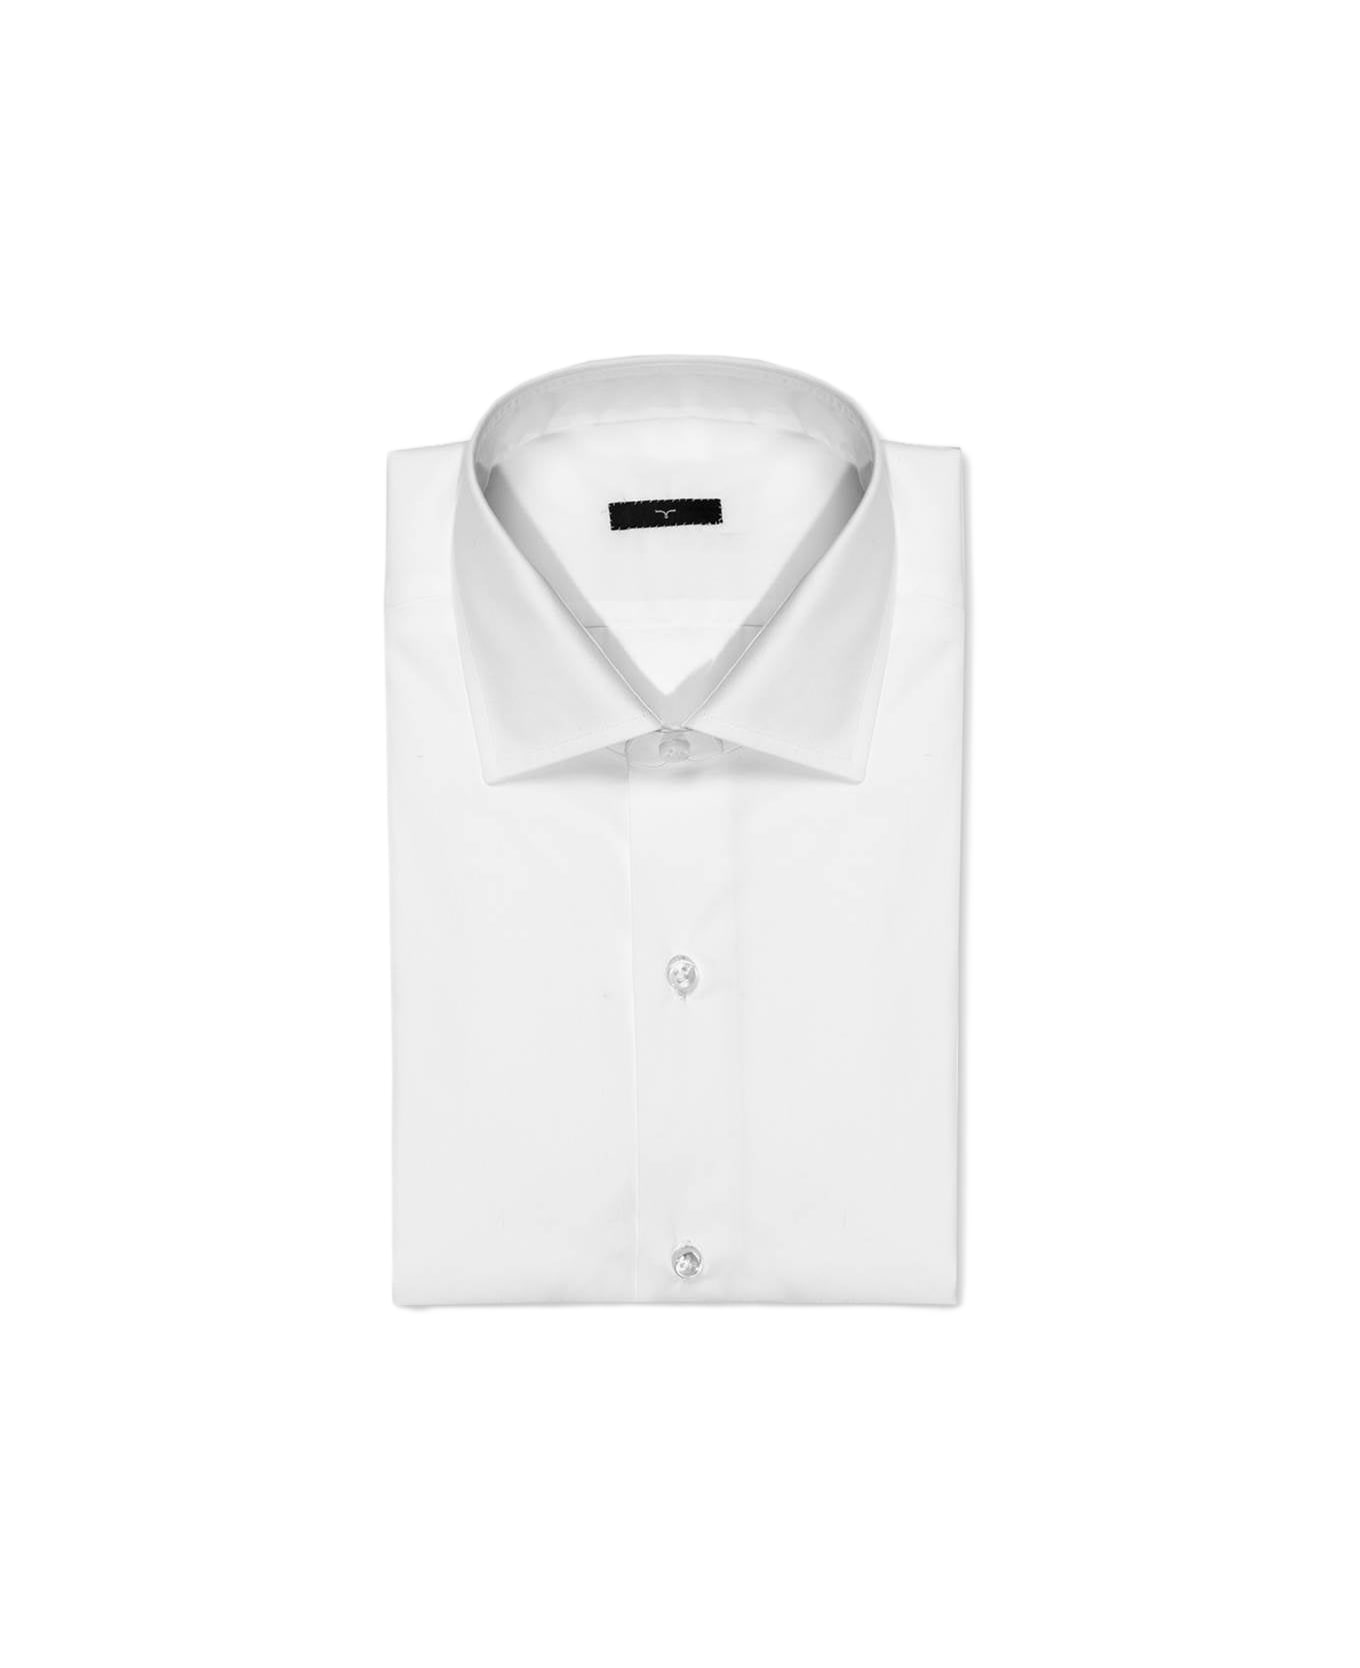 Larusmiani Handmade Shirt 'mayfair' Shirt - White